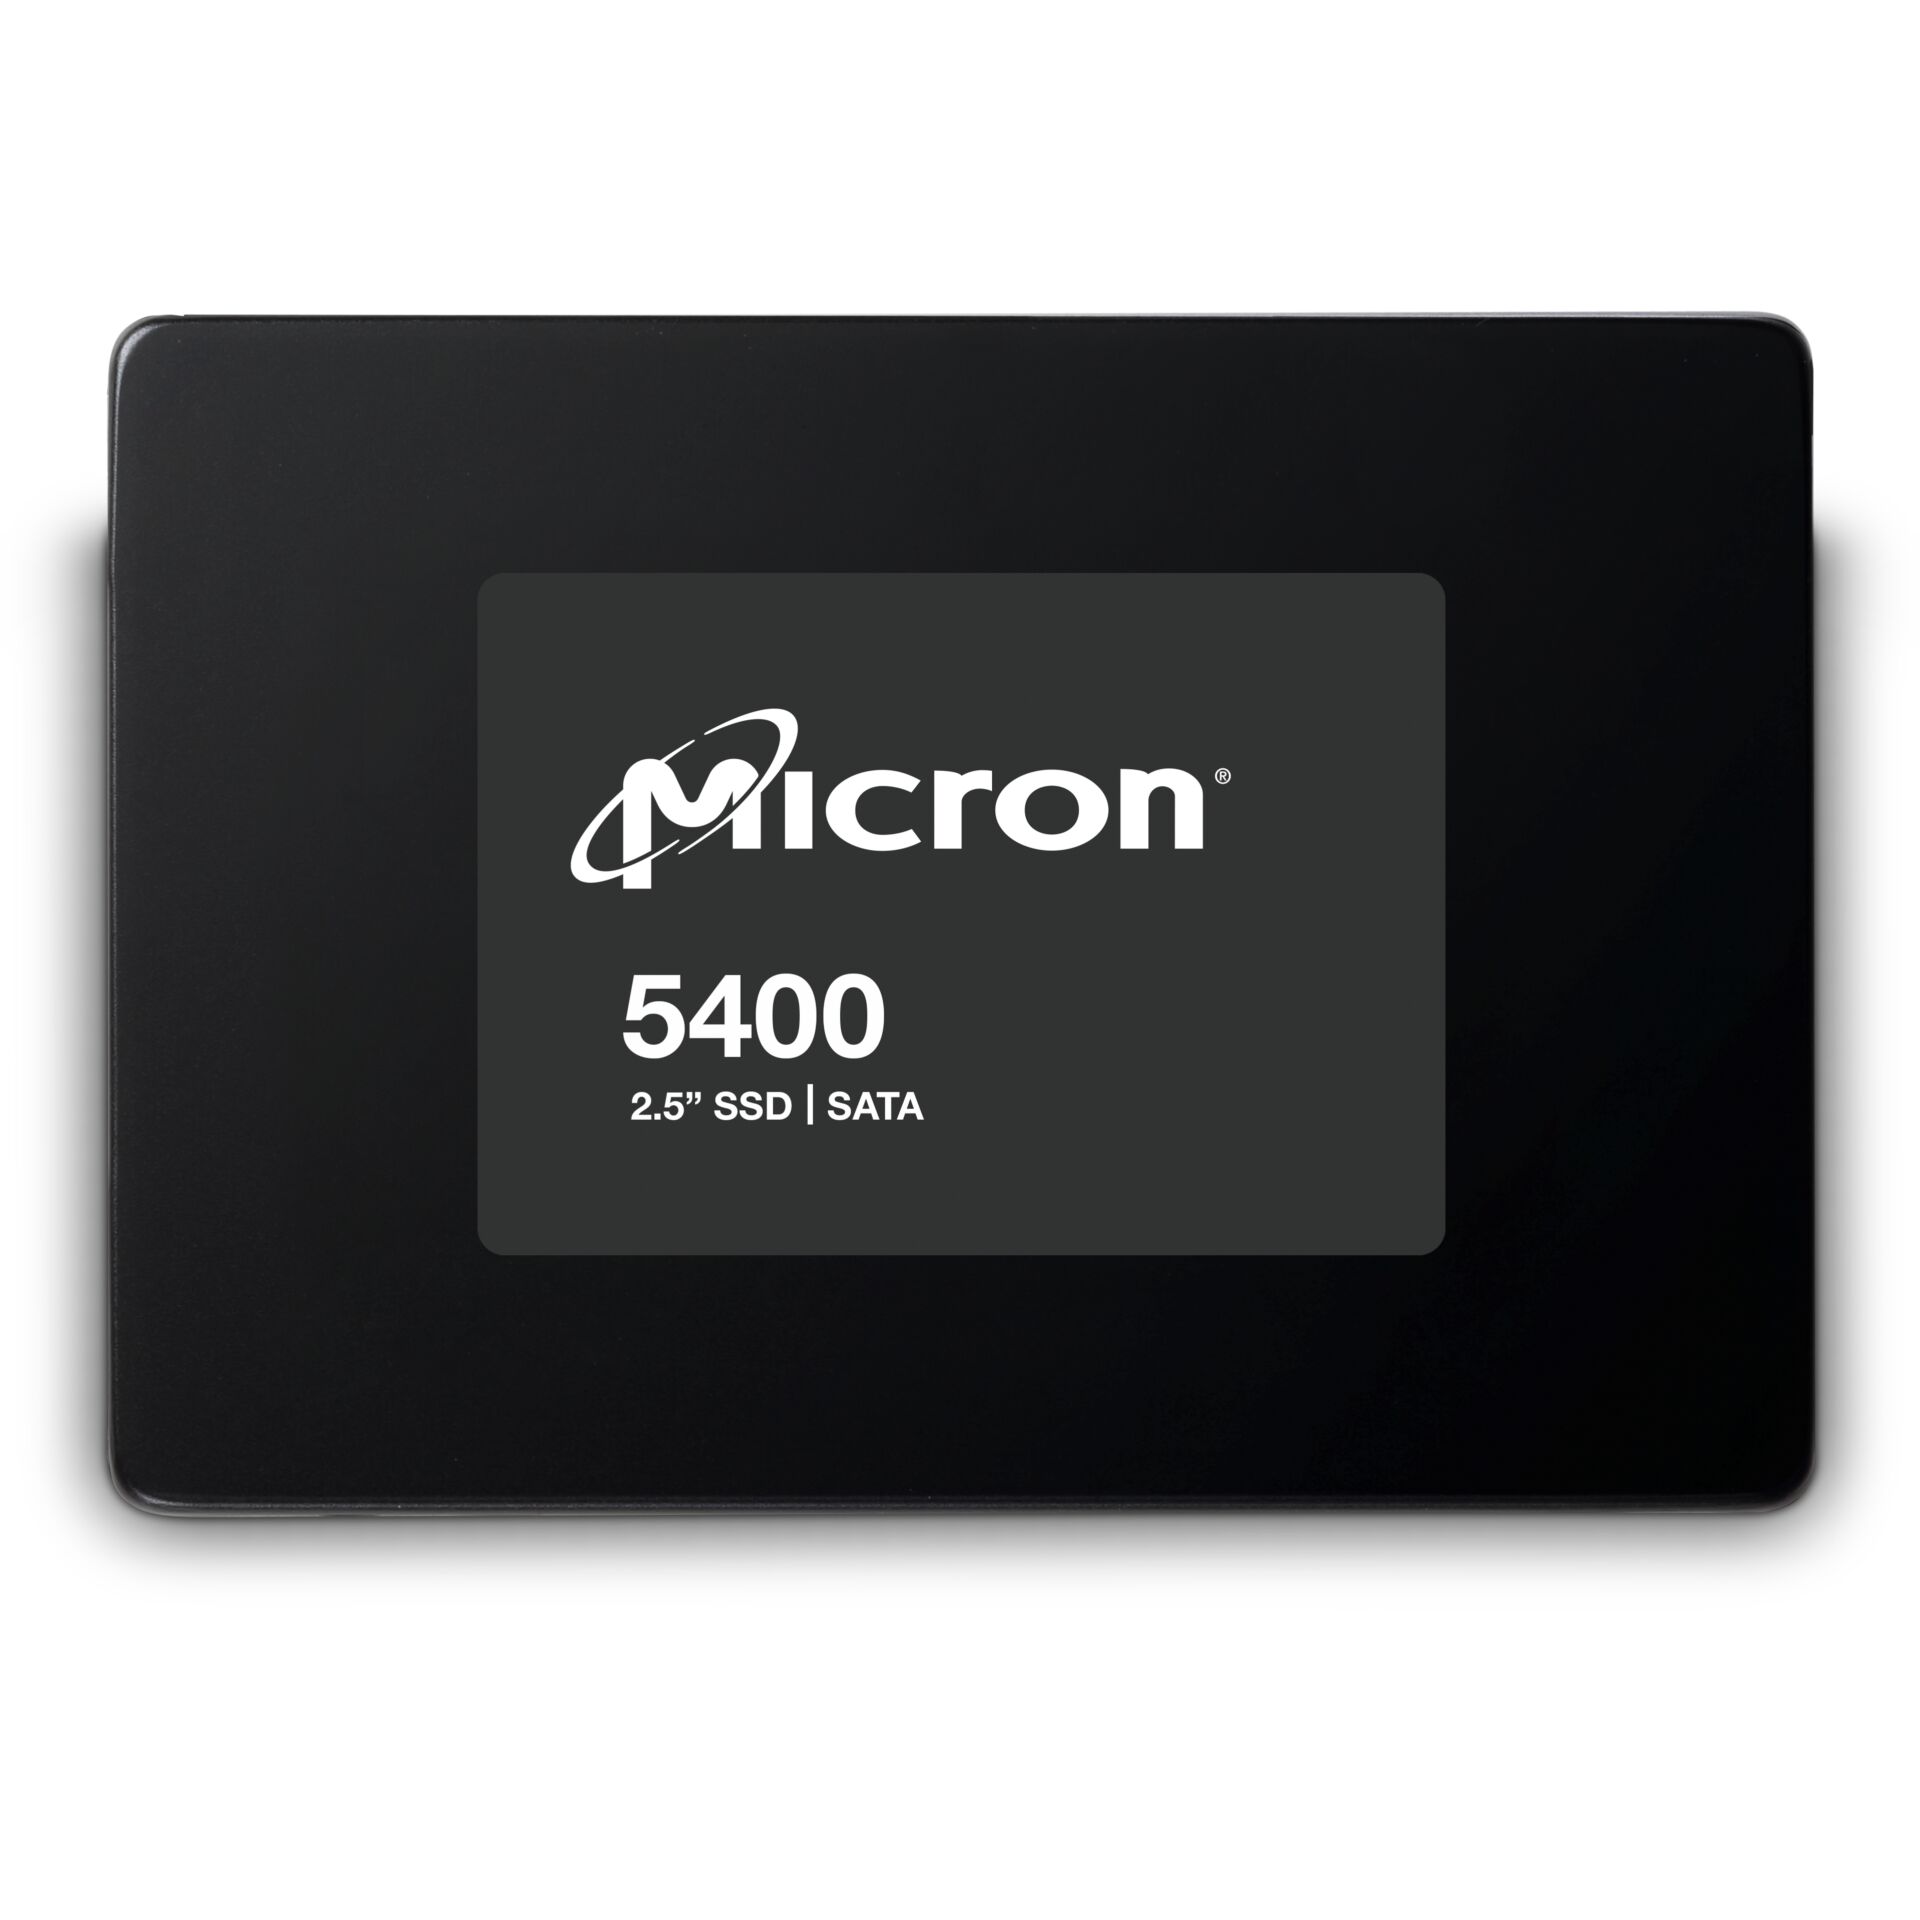 480 GB SSD Micron 5400 PRO - Read Intensive, SATA 6Gb/s, lesen: 540MB/s, schreiben: 520MB/s, TBW: 1.32PB